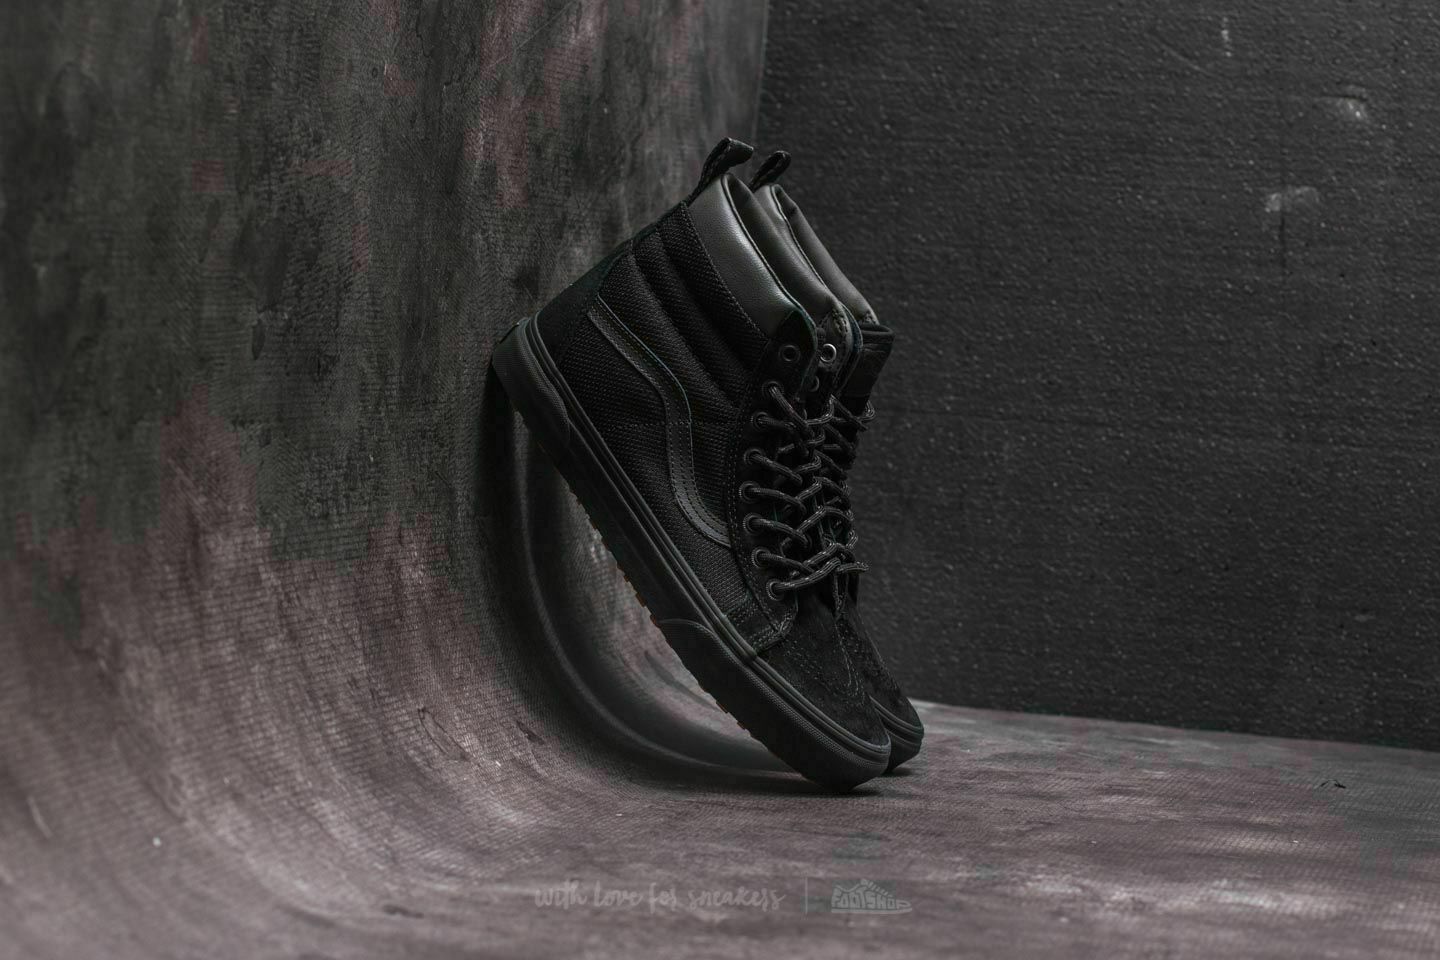 Vans SK8 Hi MTE Black/Ballistic Men's Classic Skate Shoes Size 7 - image 2 of 5